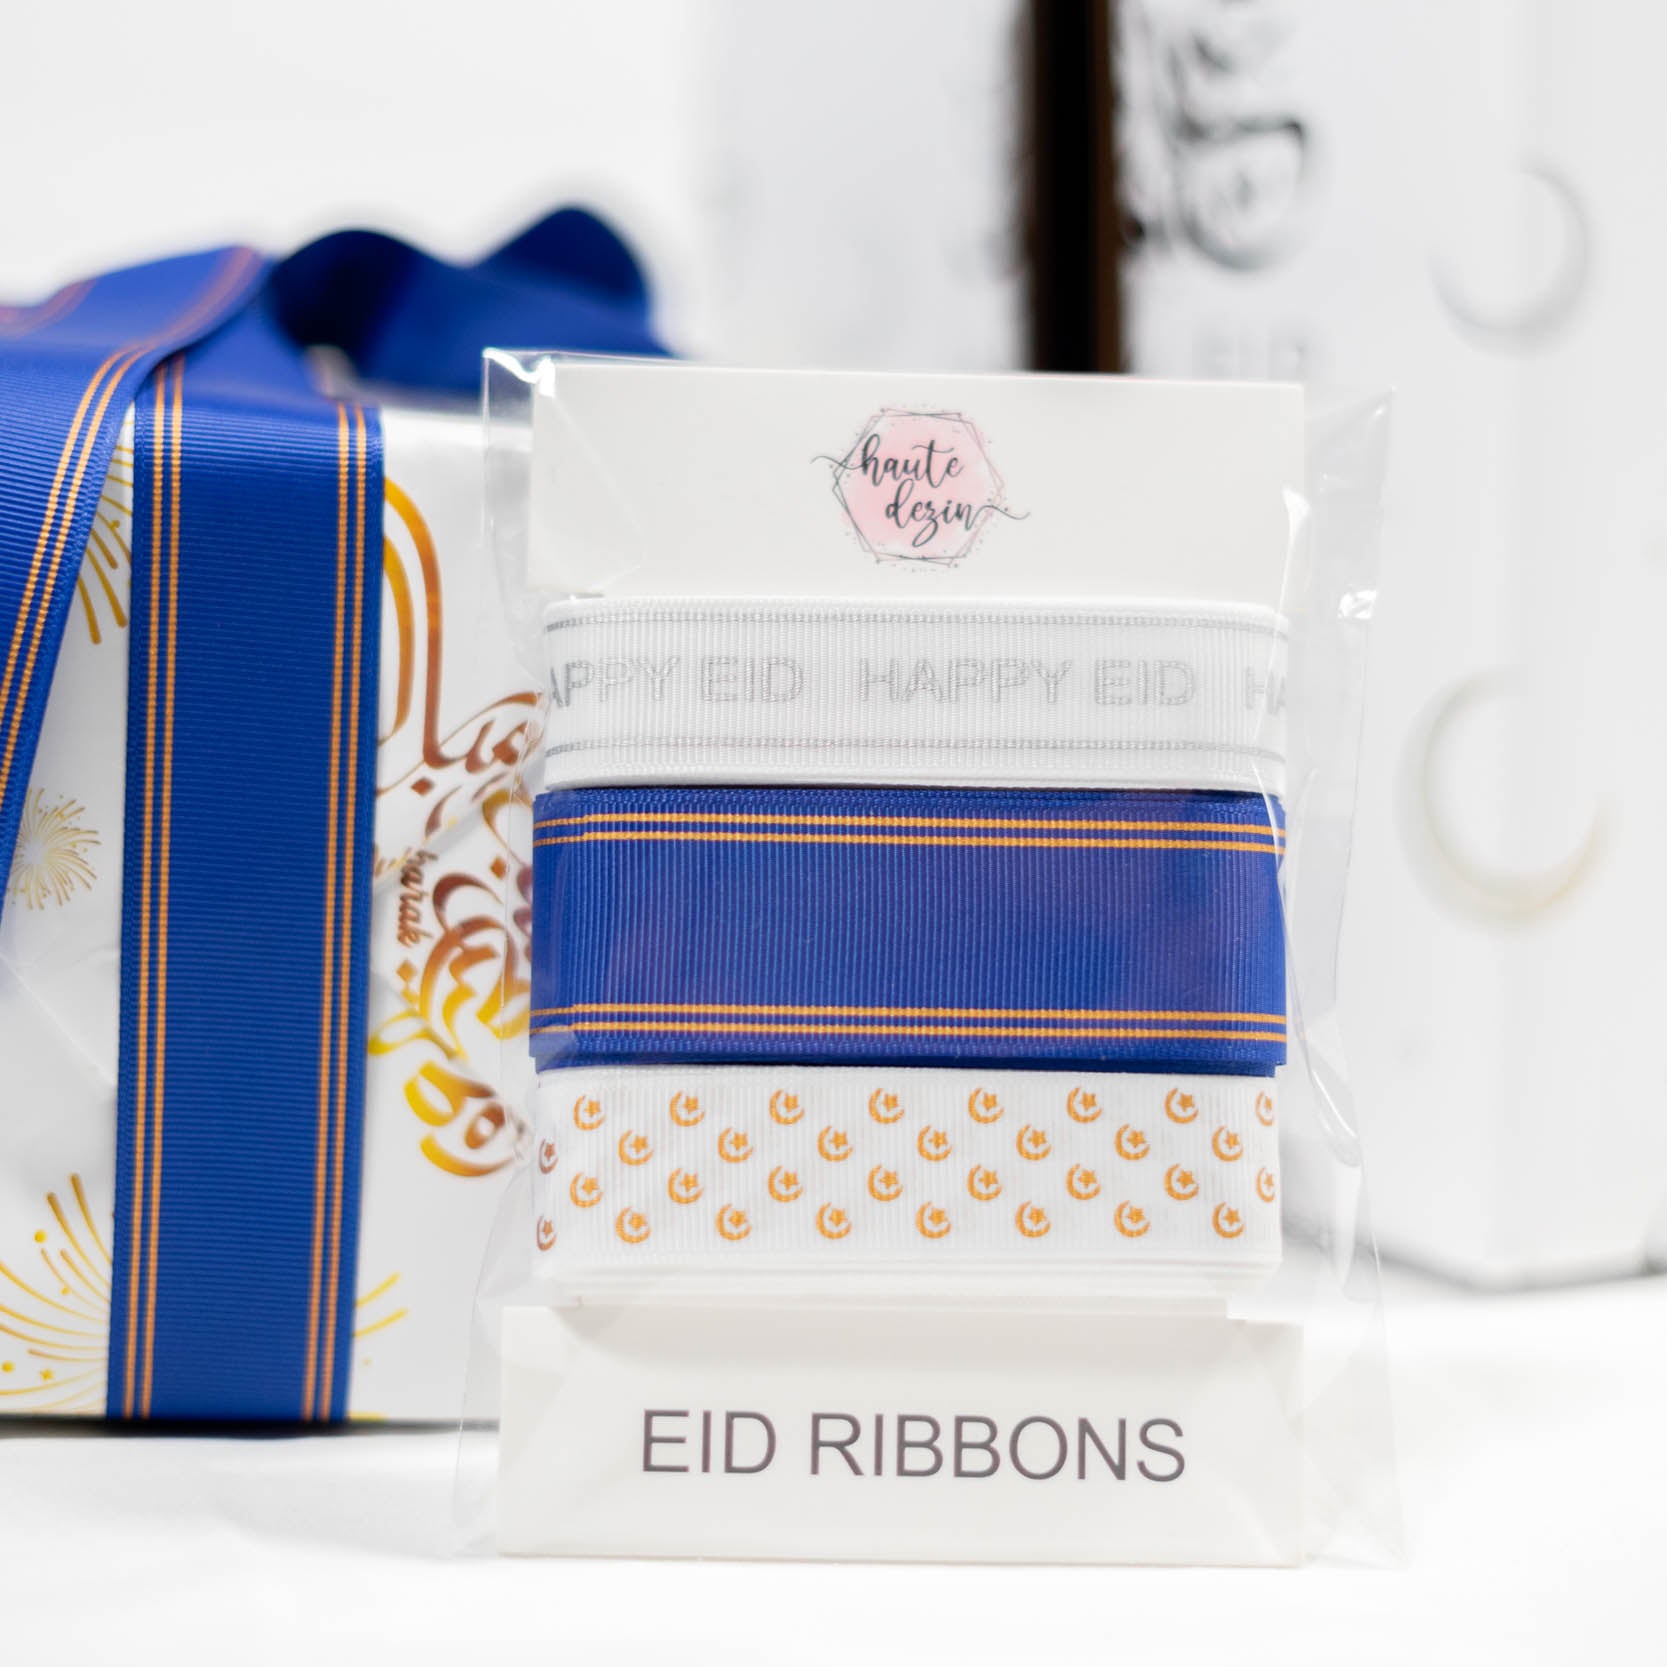 Eid Mubarak / Happy Eid Ribbons Set (Blue)